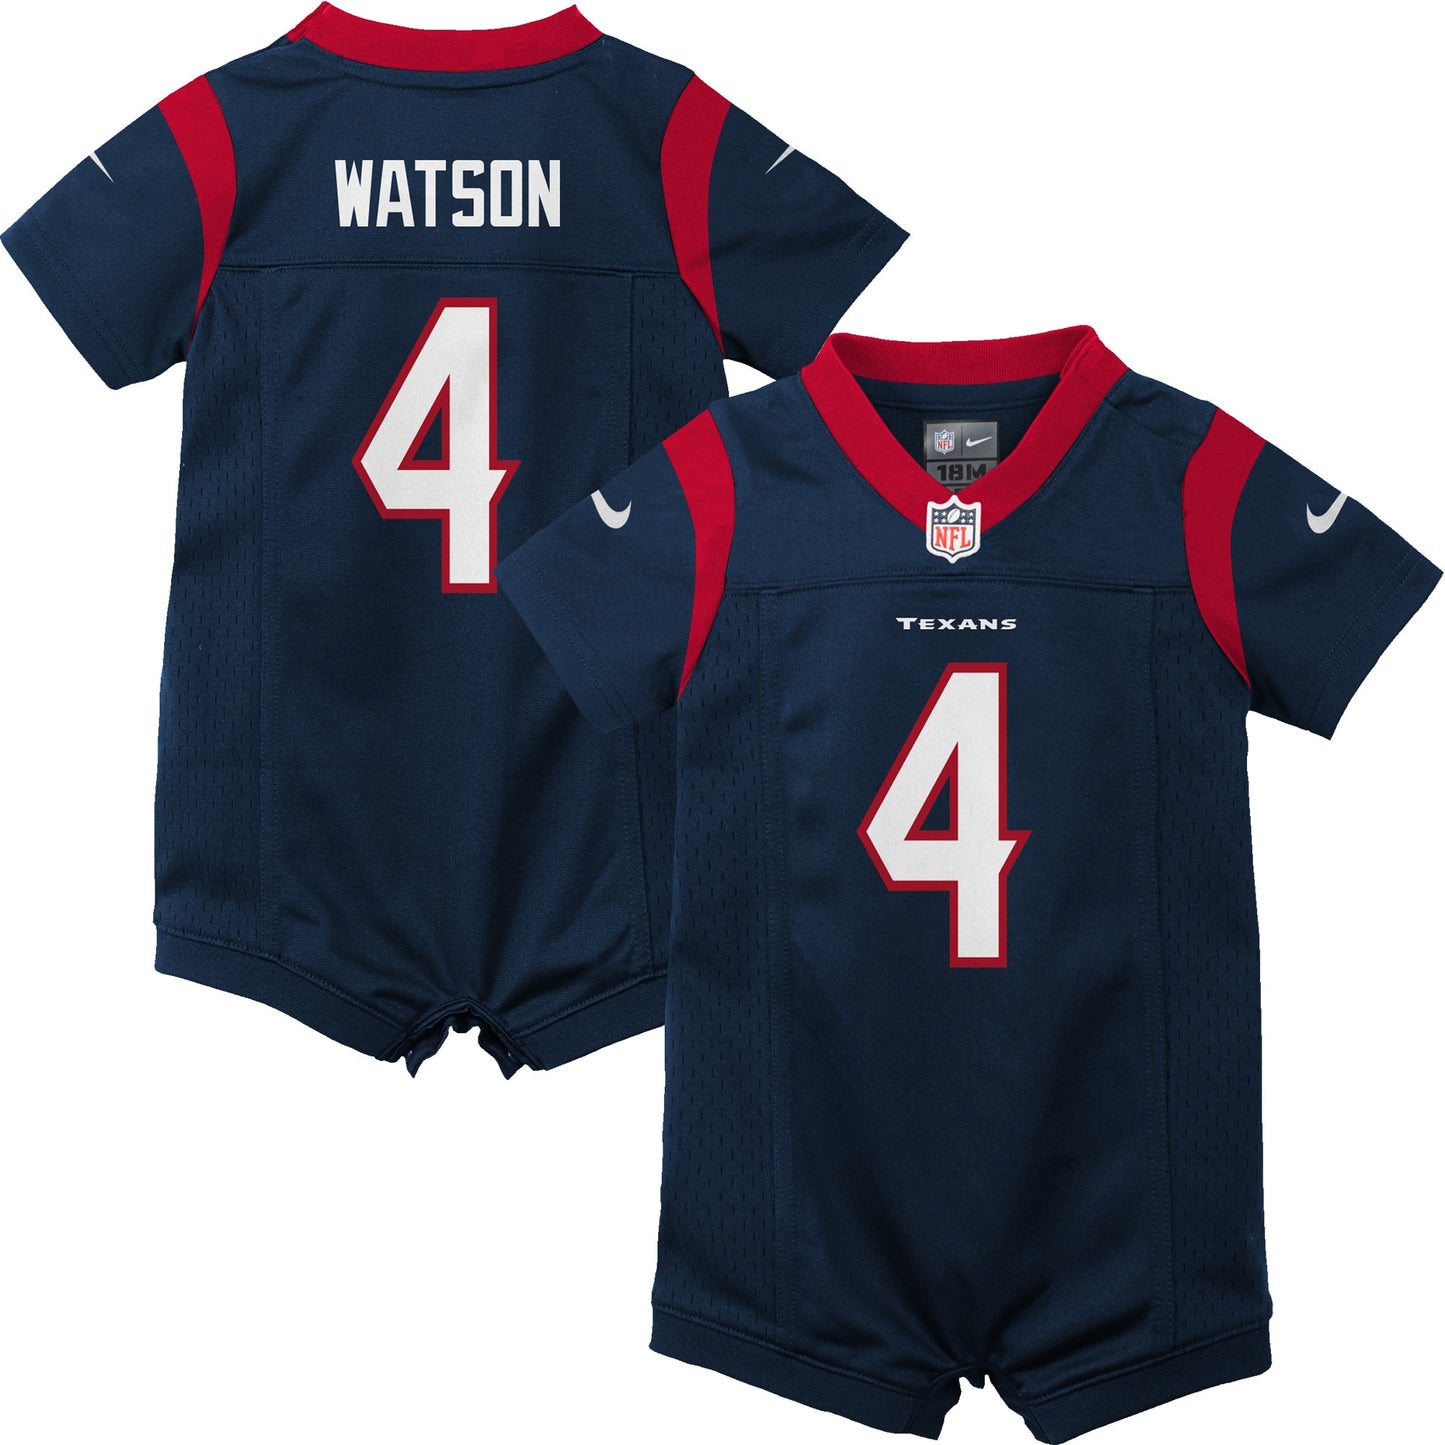 Deshaun Watson Houston Texans Nike Infant Romper Jersey - Navy